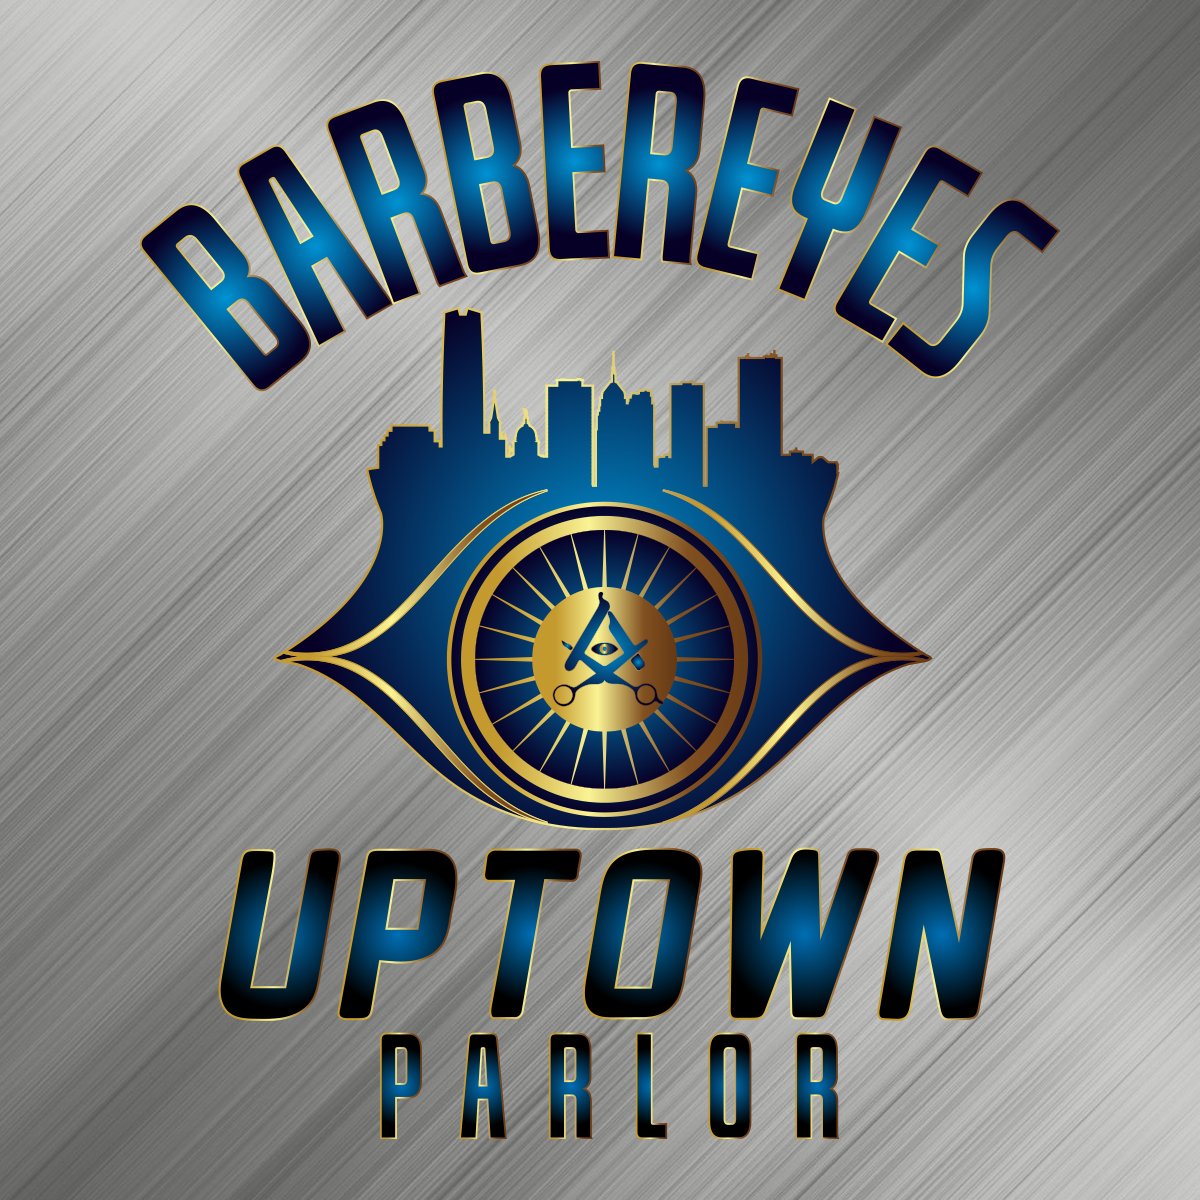 Barbereyes Uptown Parlor 